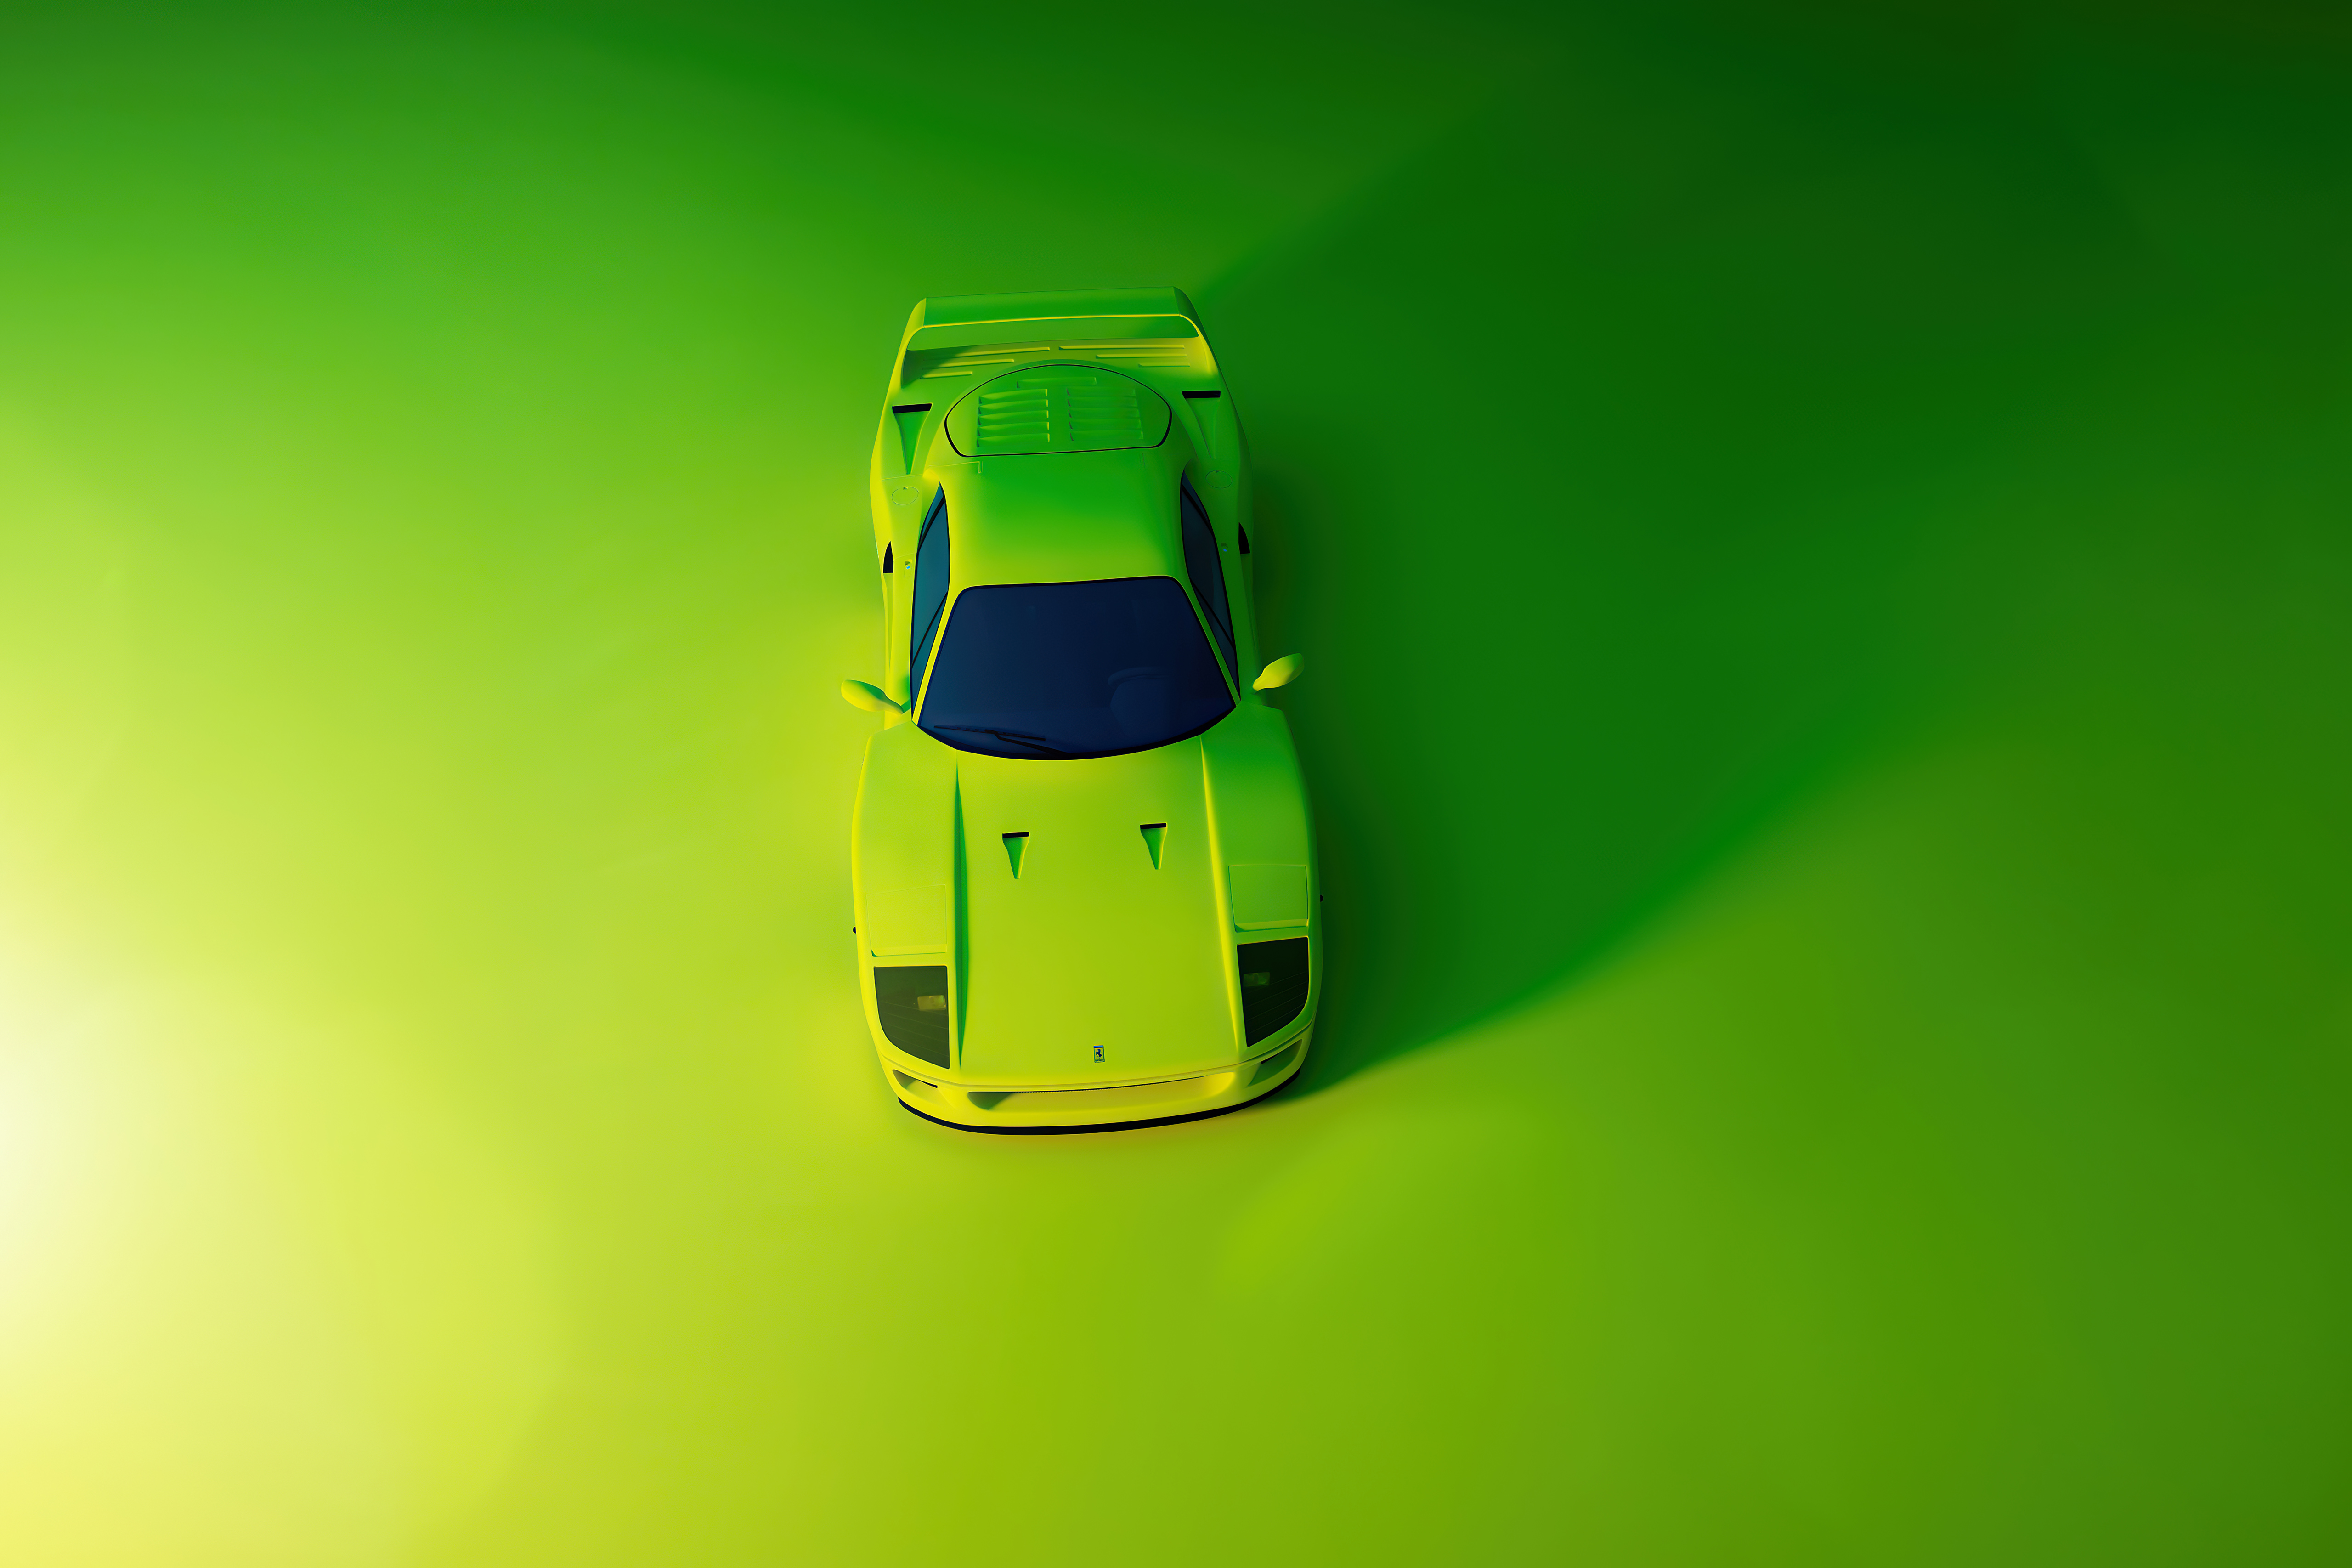 Green Ferrari F40k HD 4k Wallpaper, Image, Background, Photo and Picture